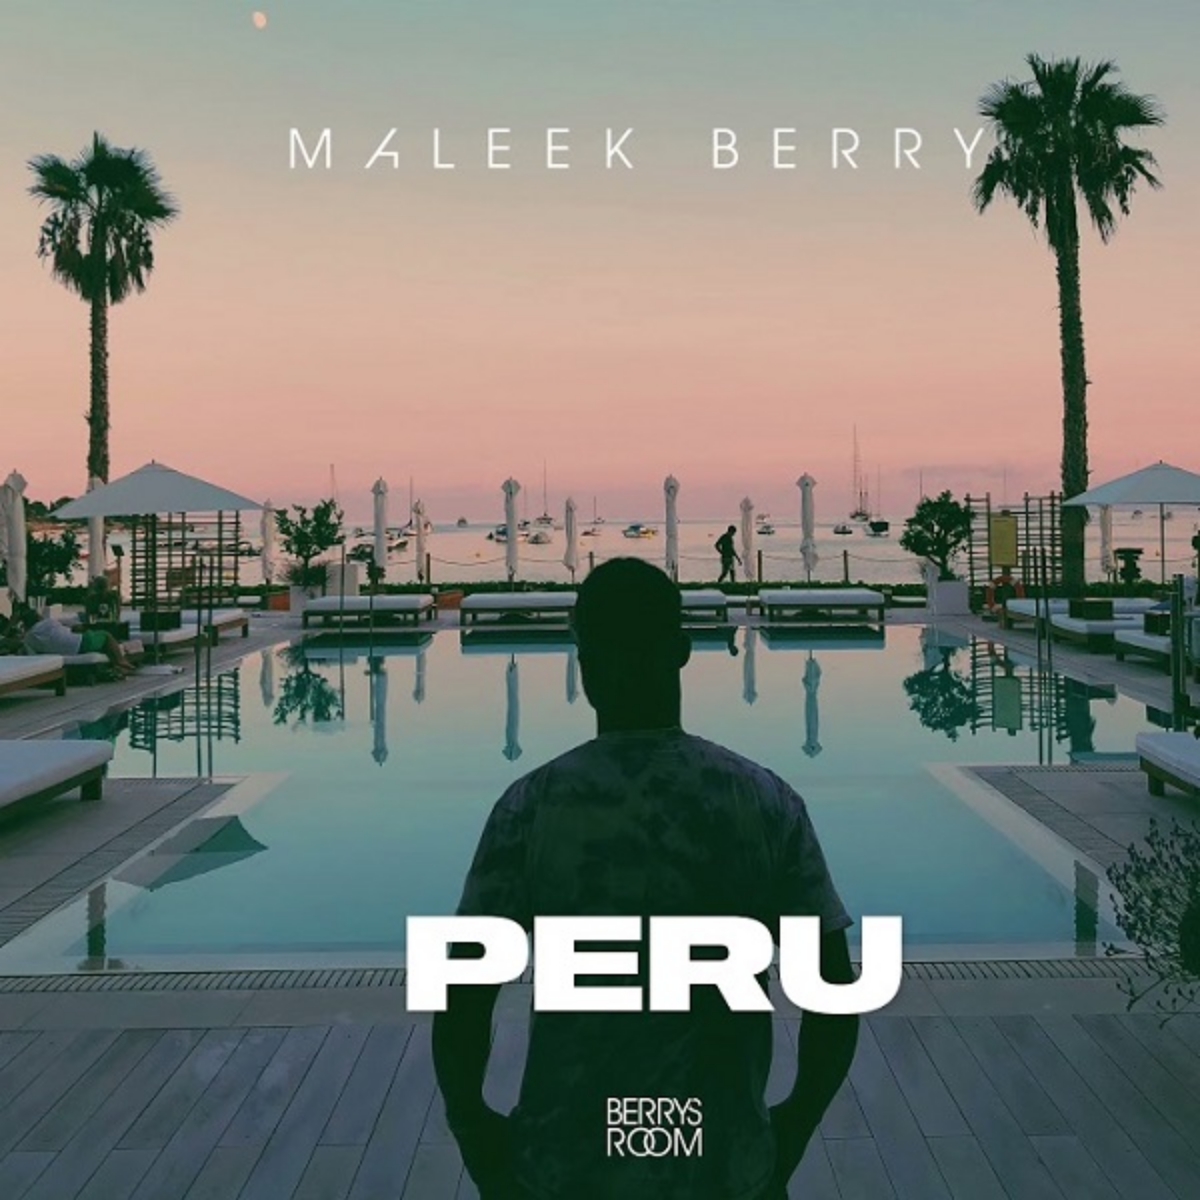 Maleek-Berry-–-Peru-Cover-www-oneclickghana-com_-mp3-image.jpg